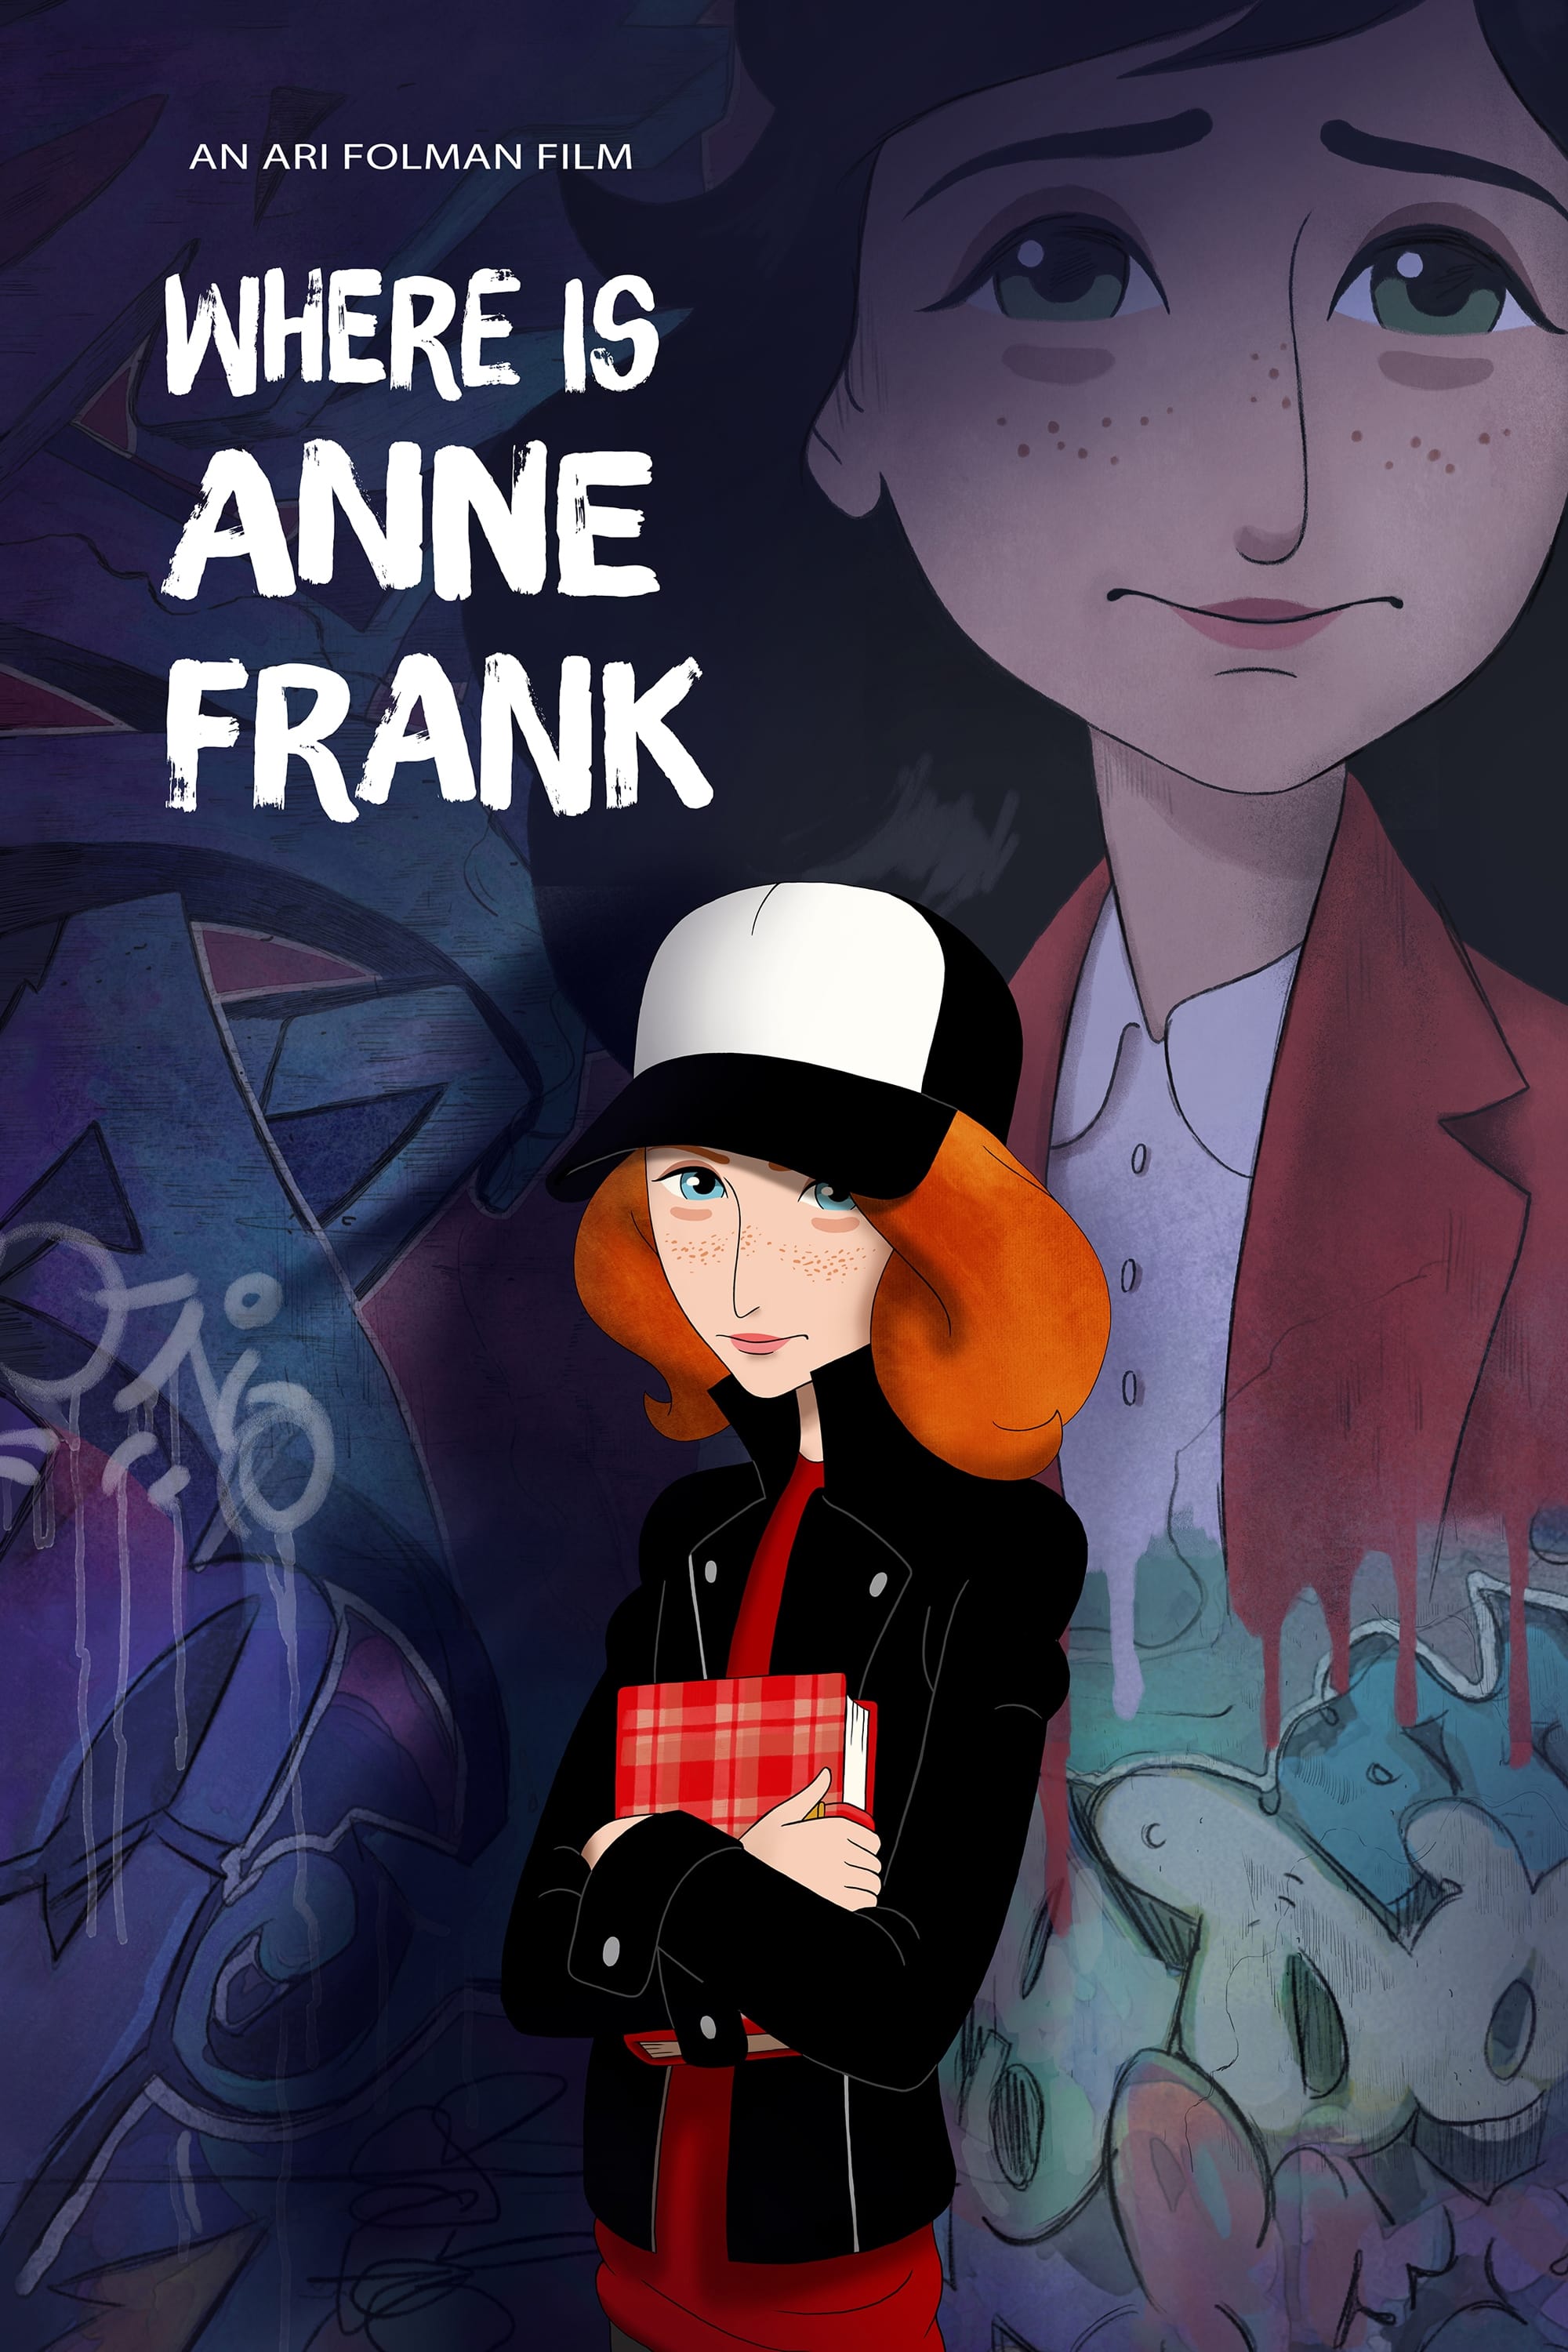 On es Anna Frank?